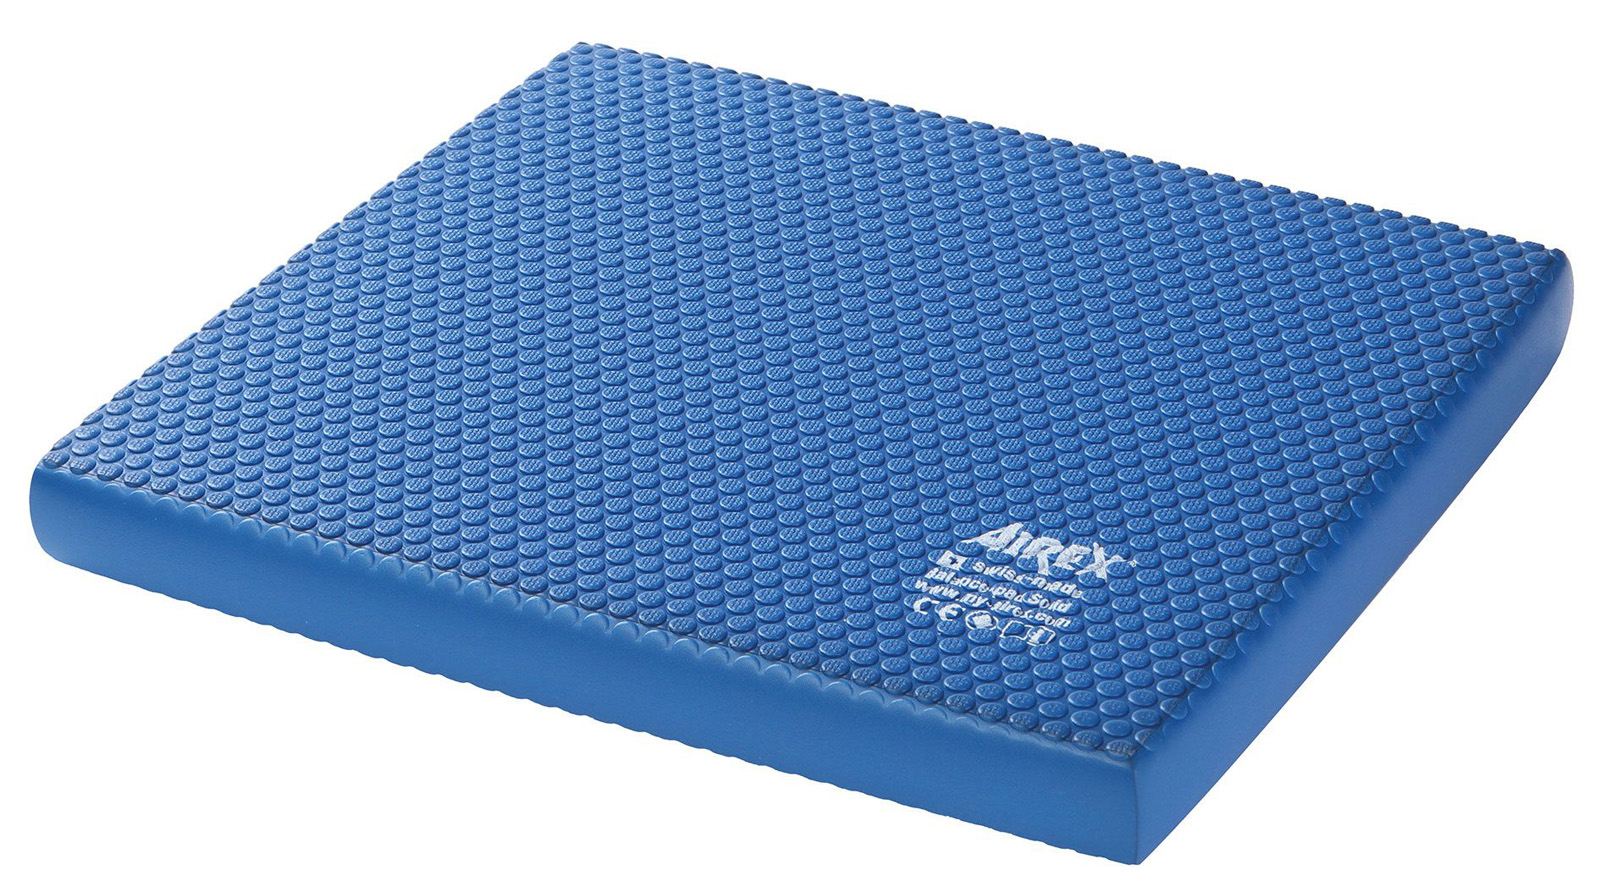 AIREX Balance-​pad Solid royal blau 